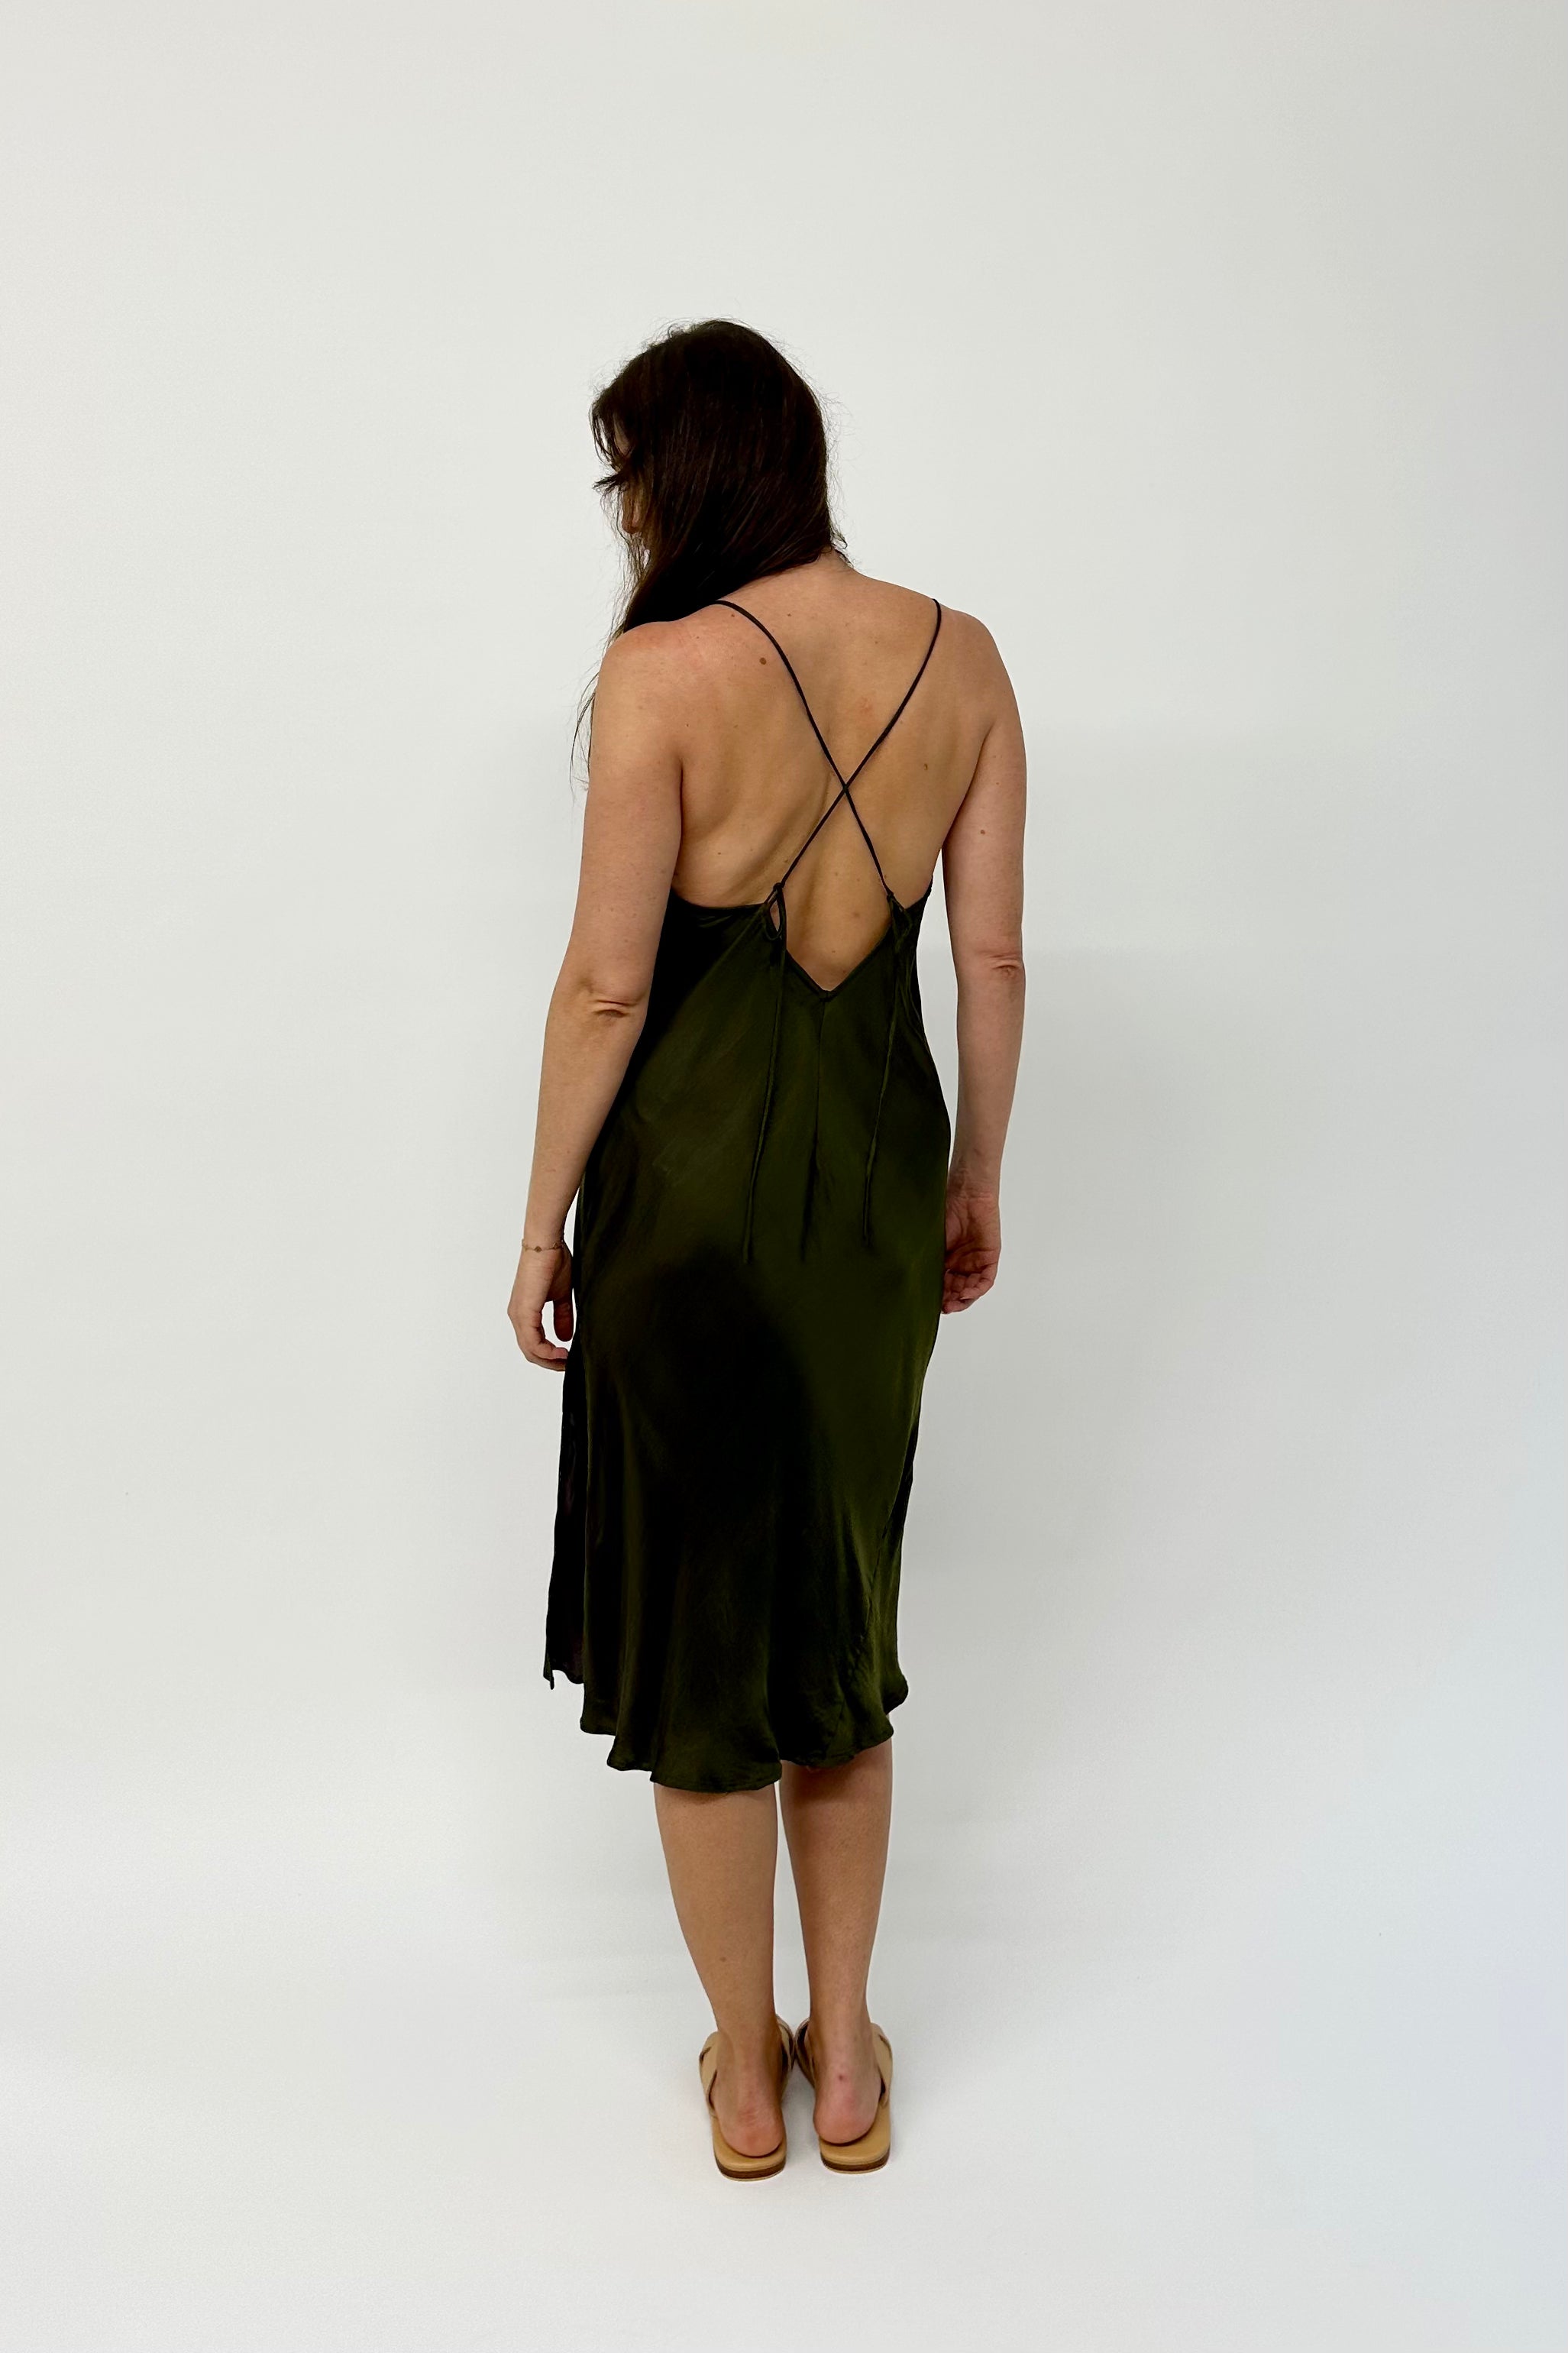 Green silk dress with cross back